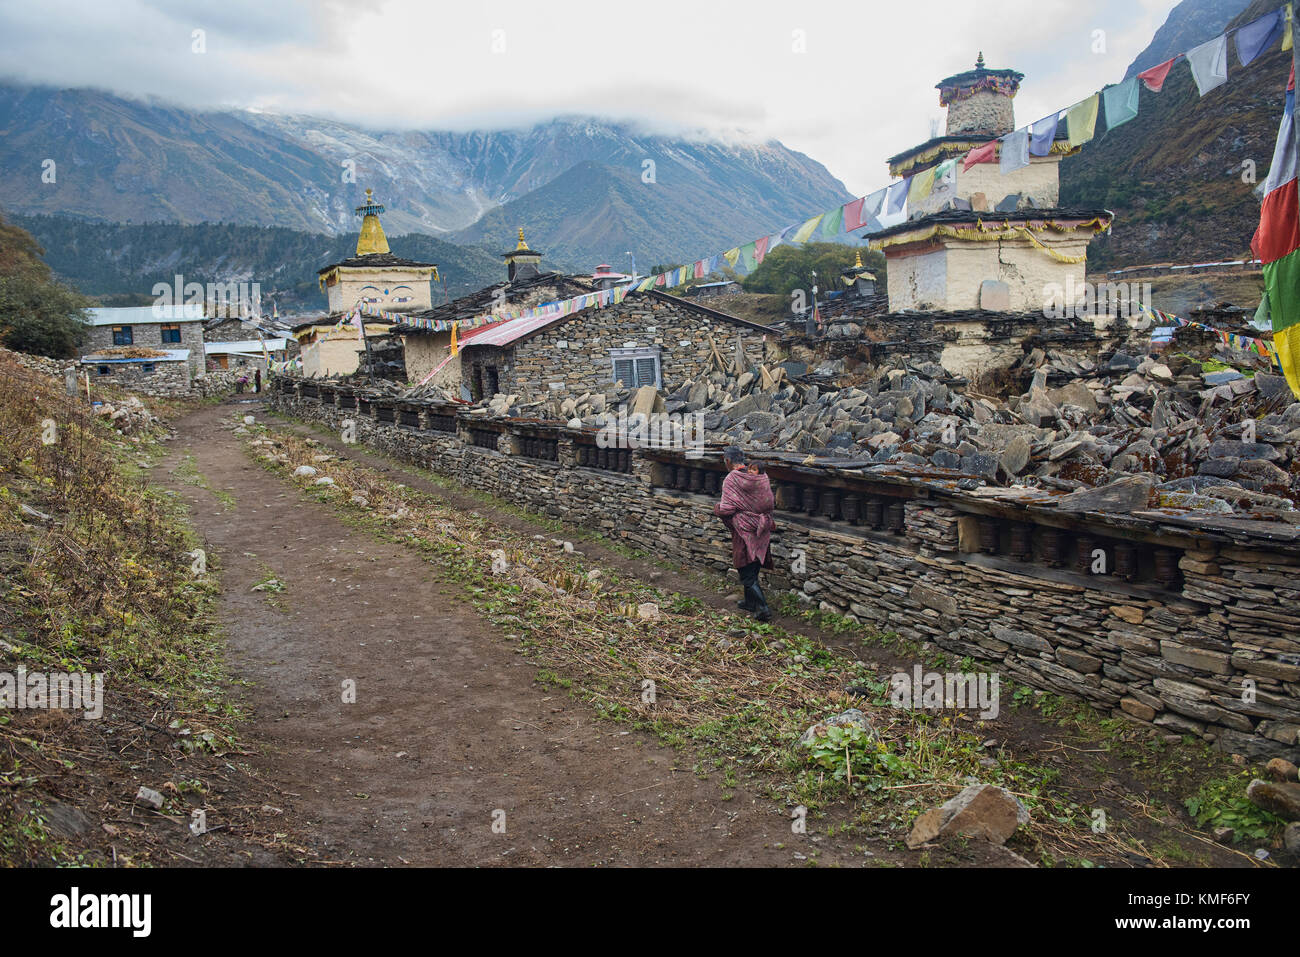 Mani wall leading into the village of Samagaon, a Tibetan area in the Manaslu region, Nepal Stock Photo